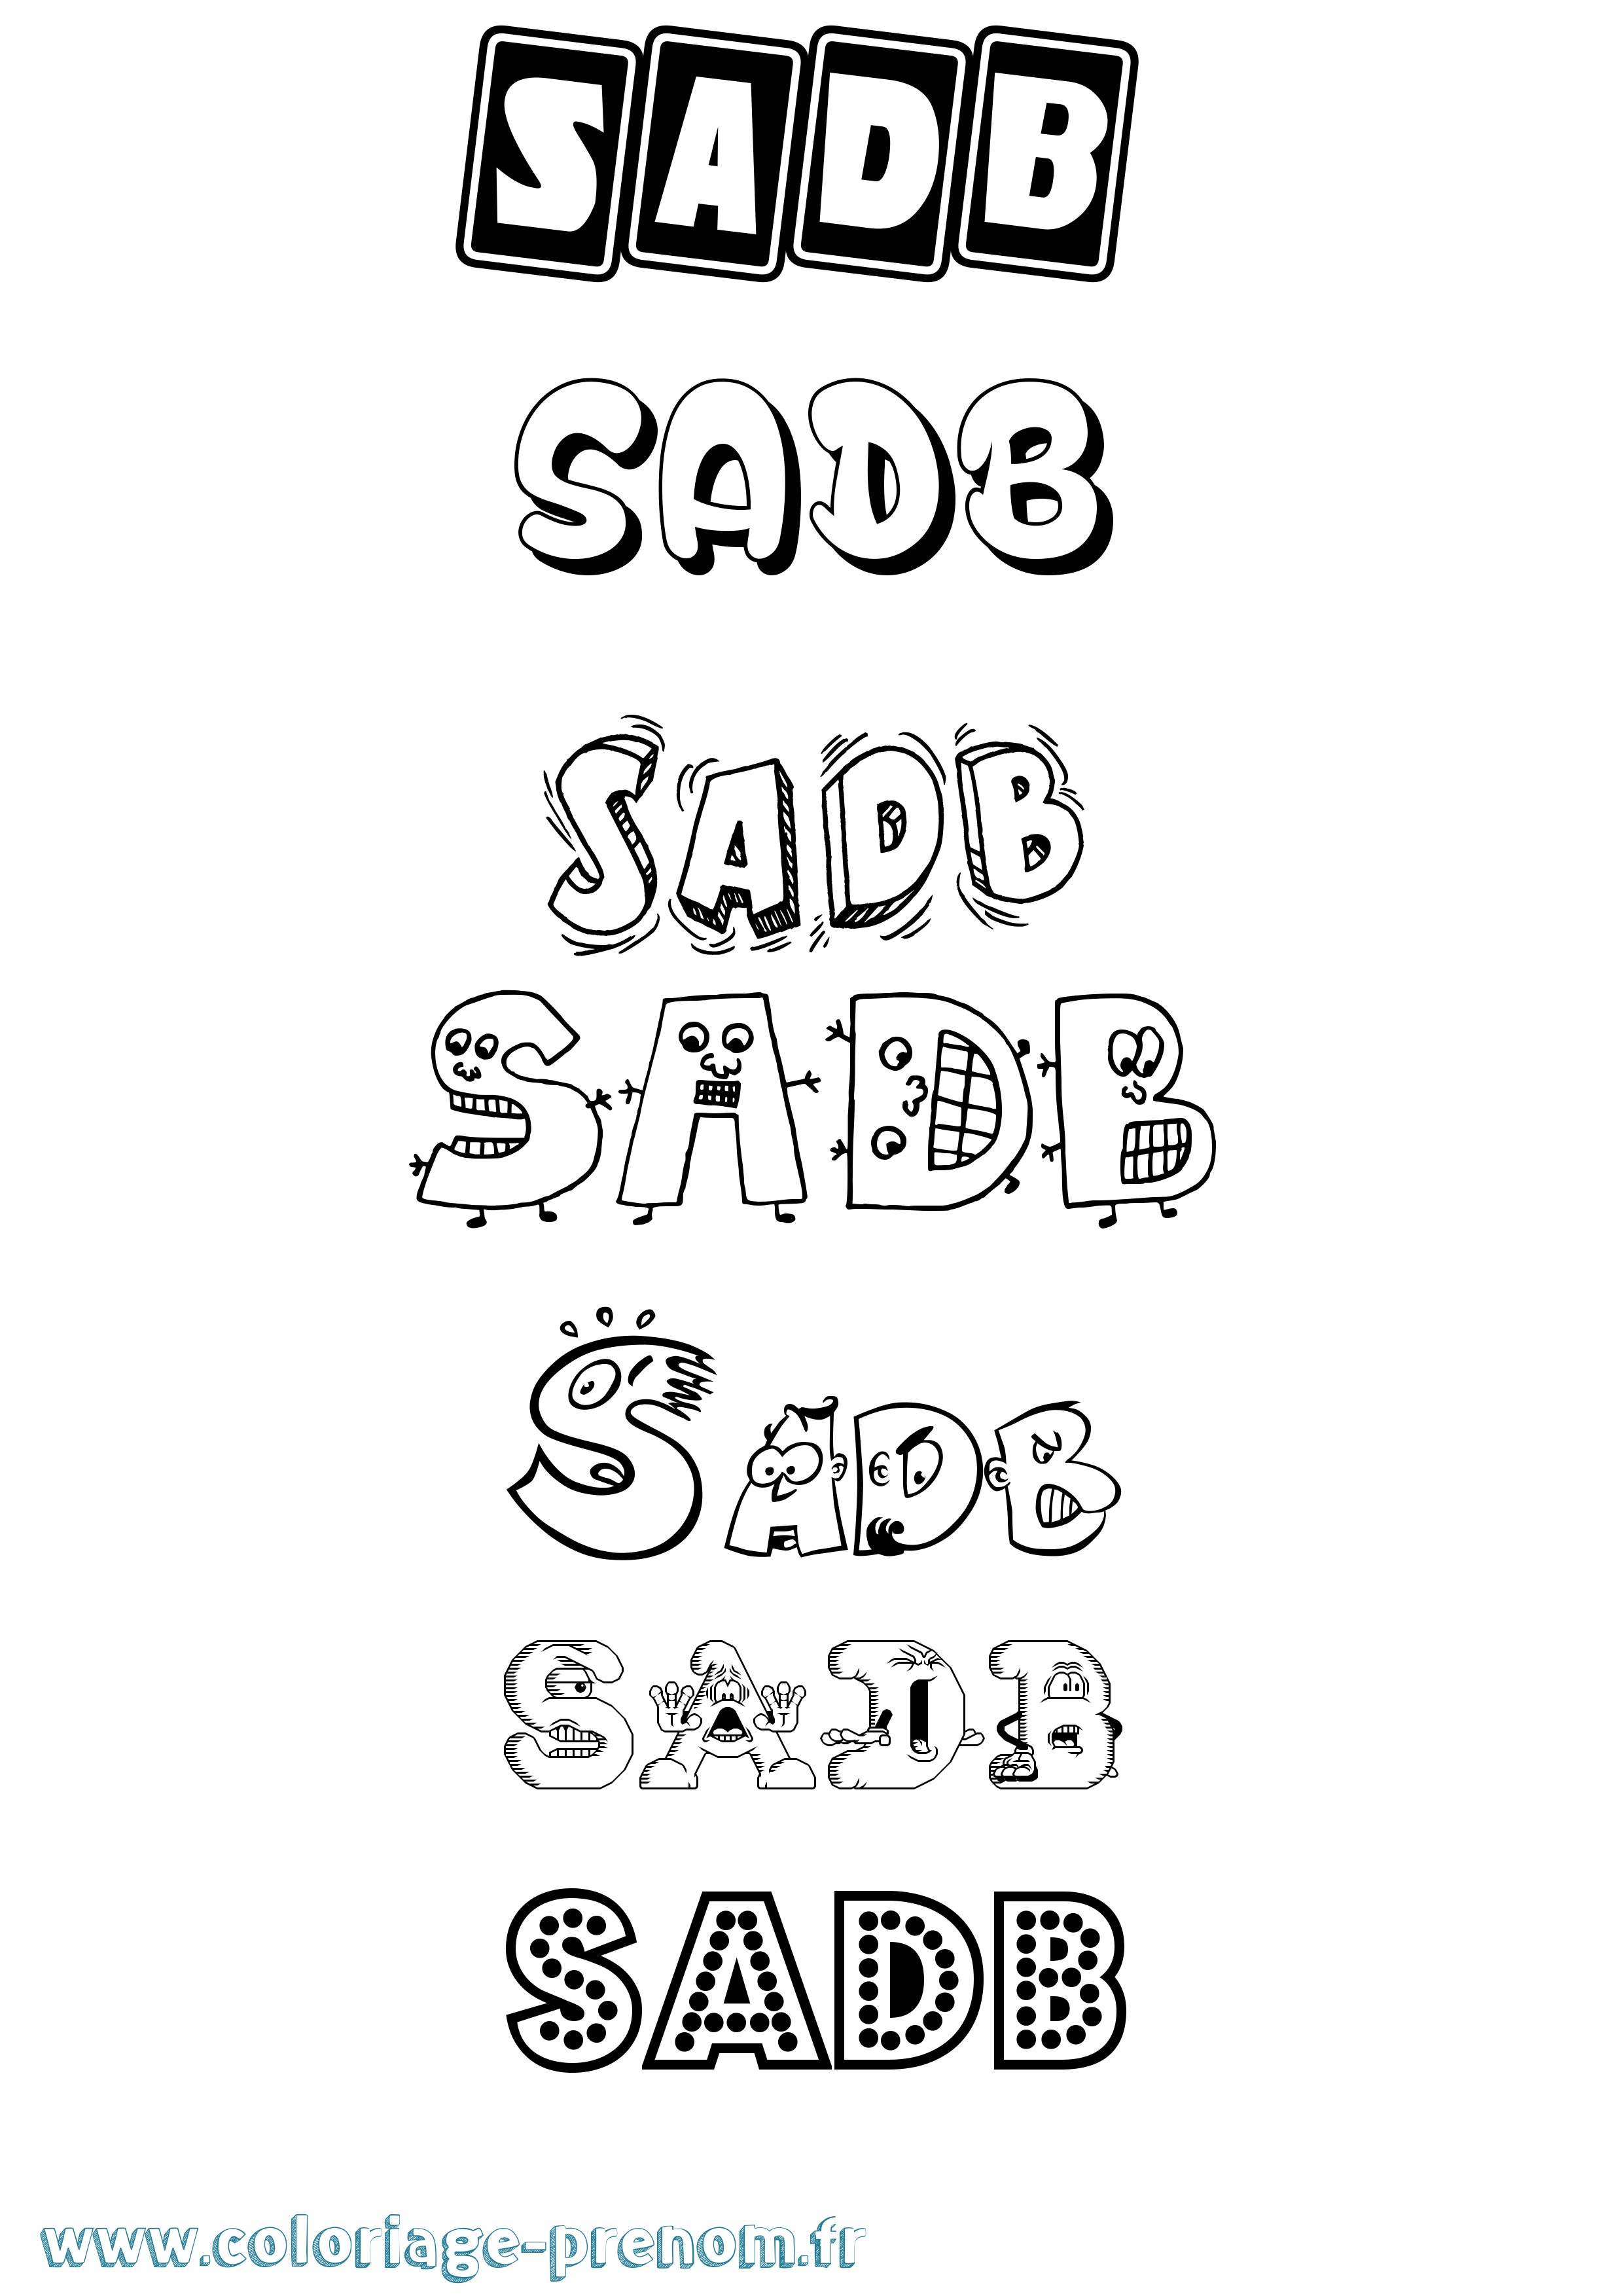 Coloriage prénom Sadb Fun